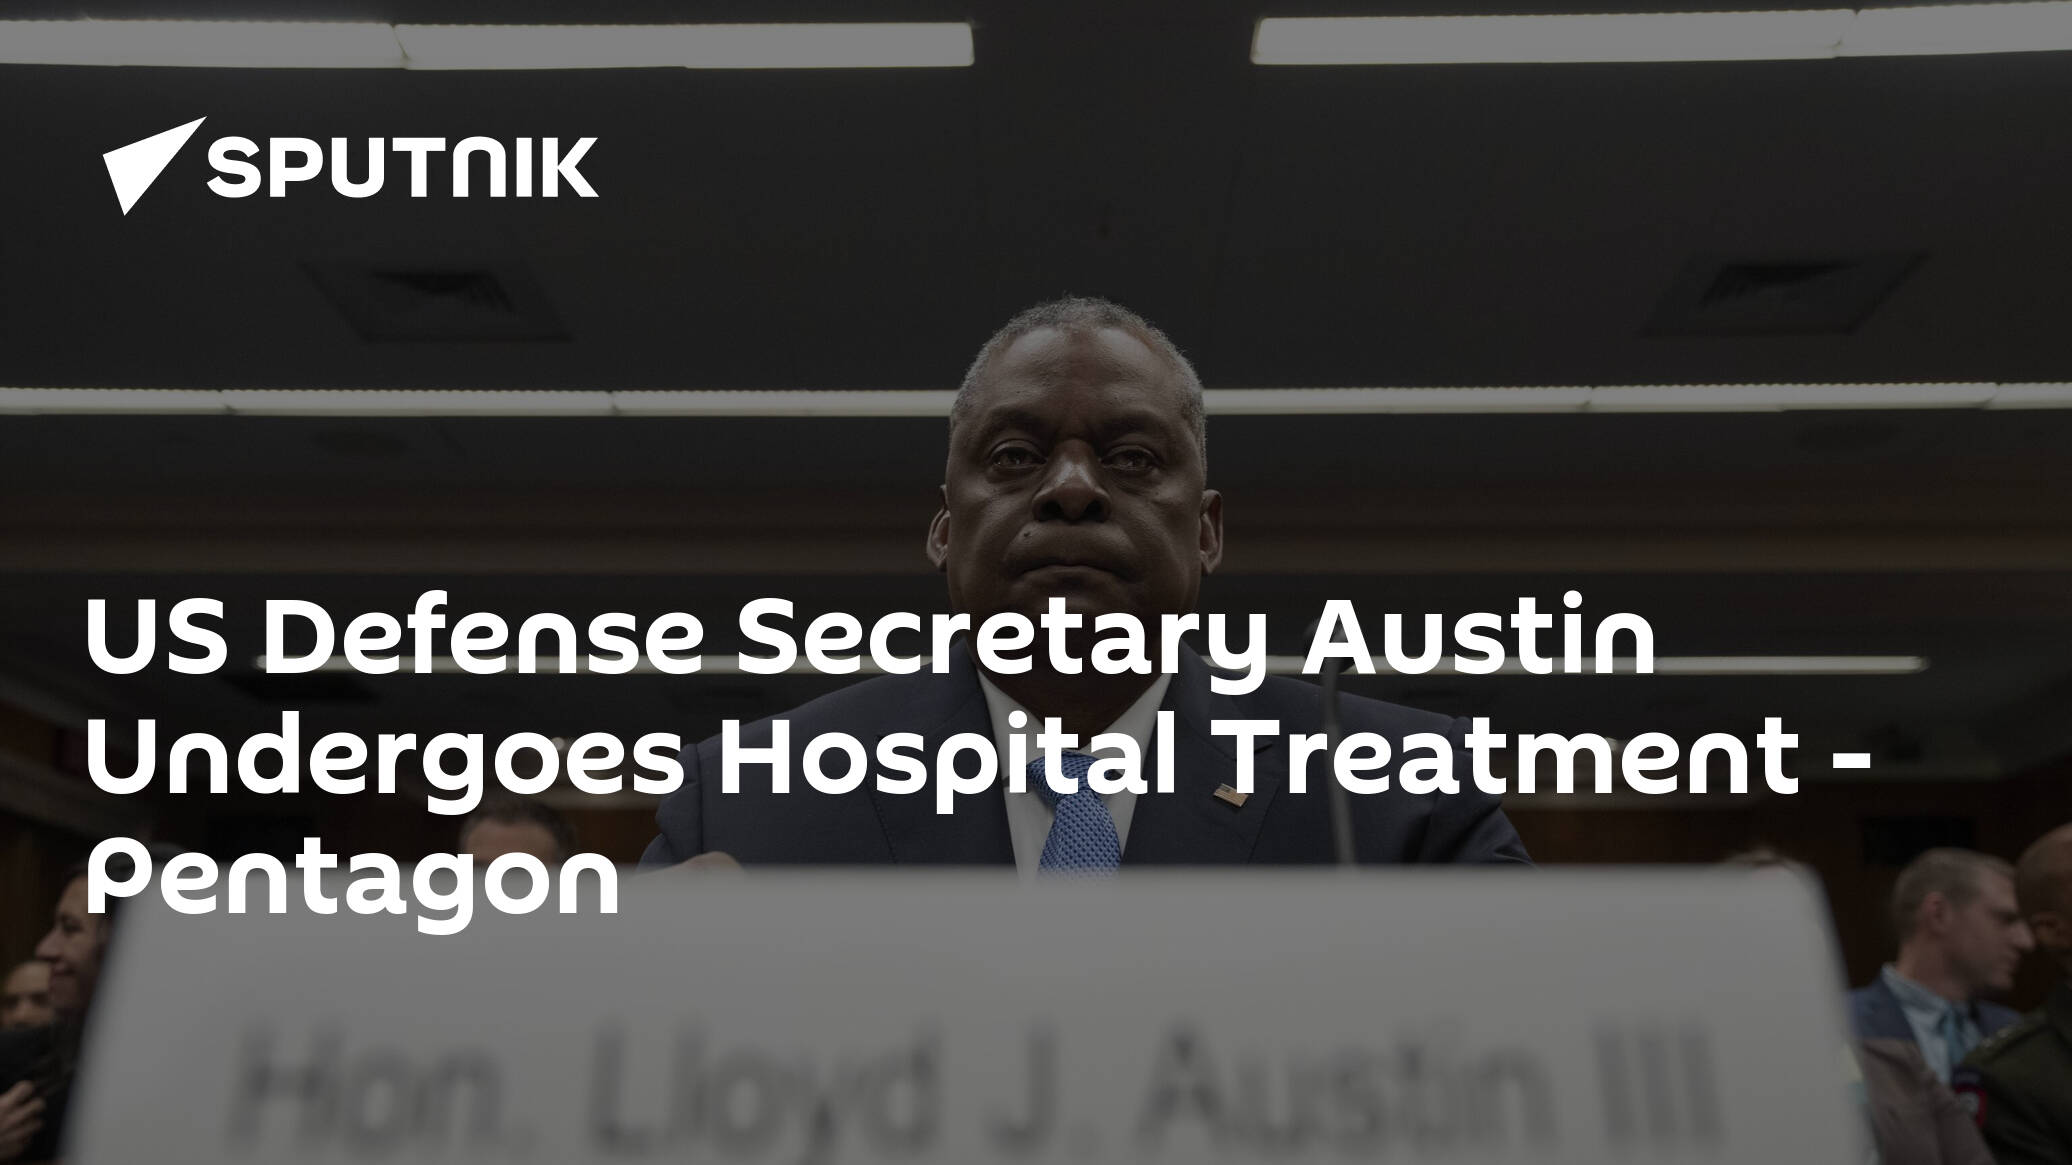 US Defense Secretary Austin Undergoes Hospital Treatment - Pentagon